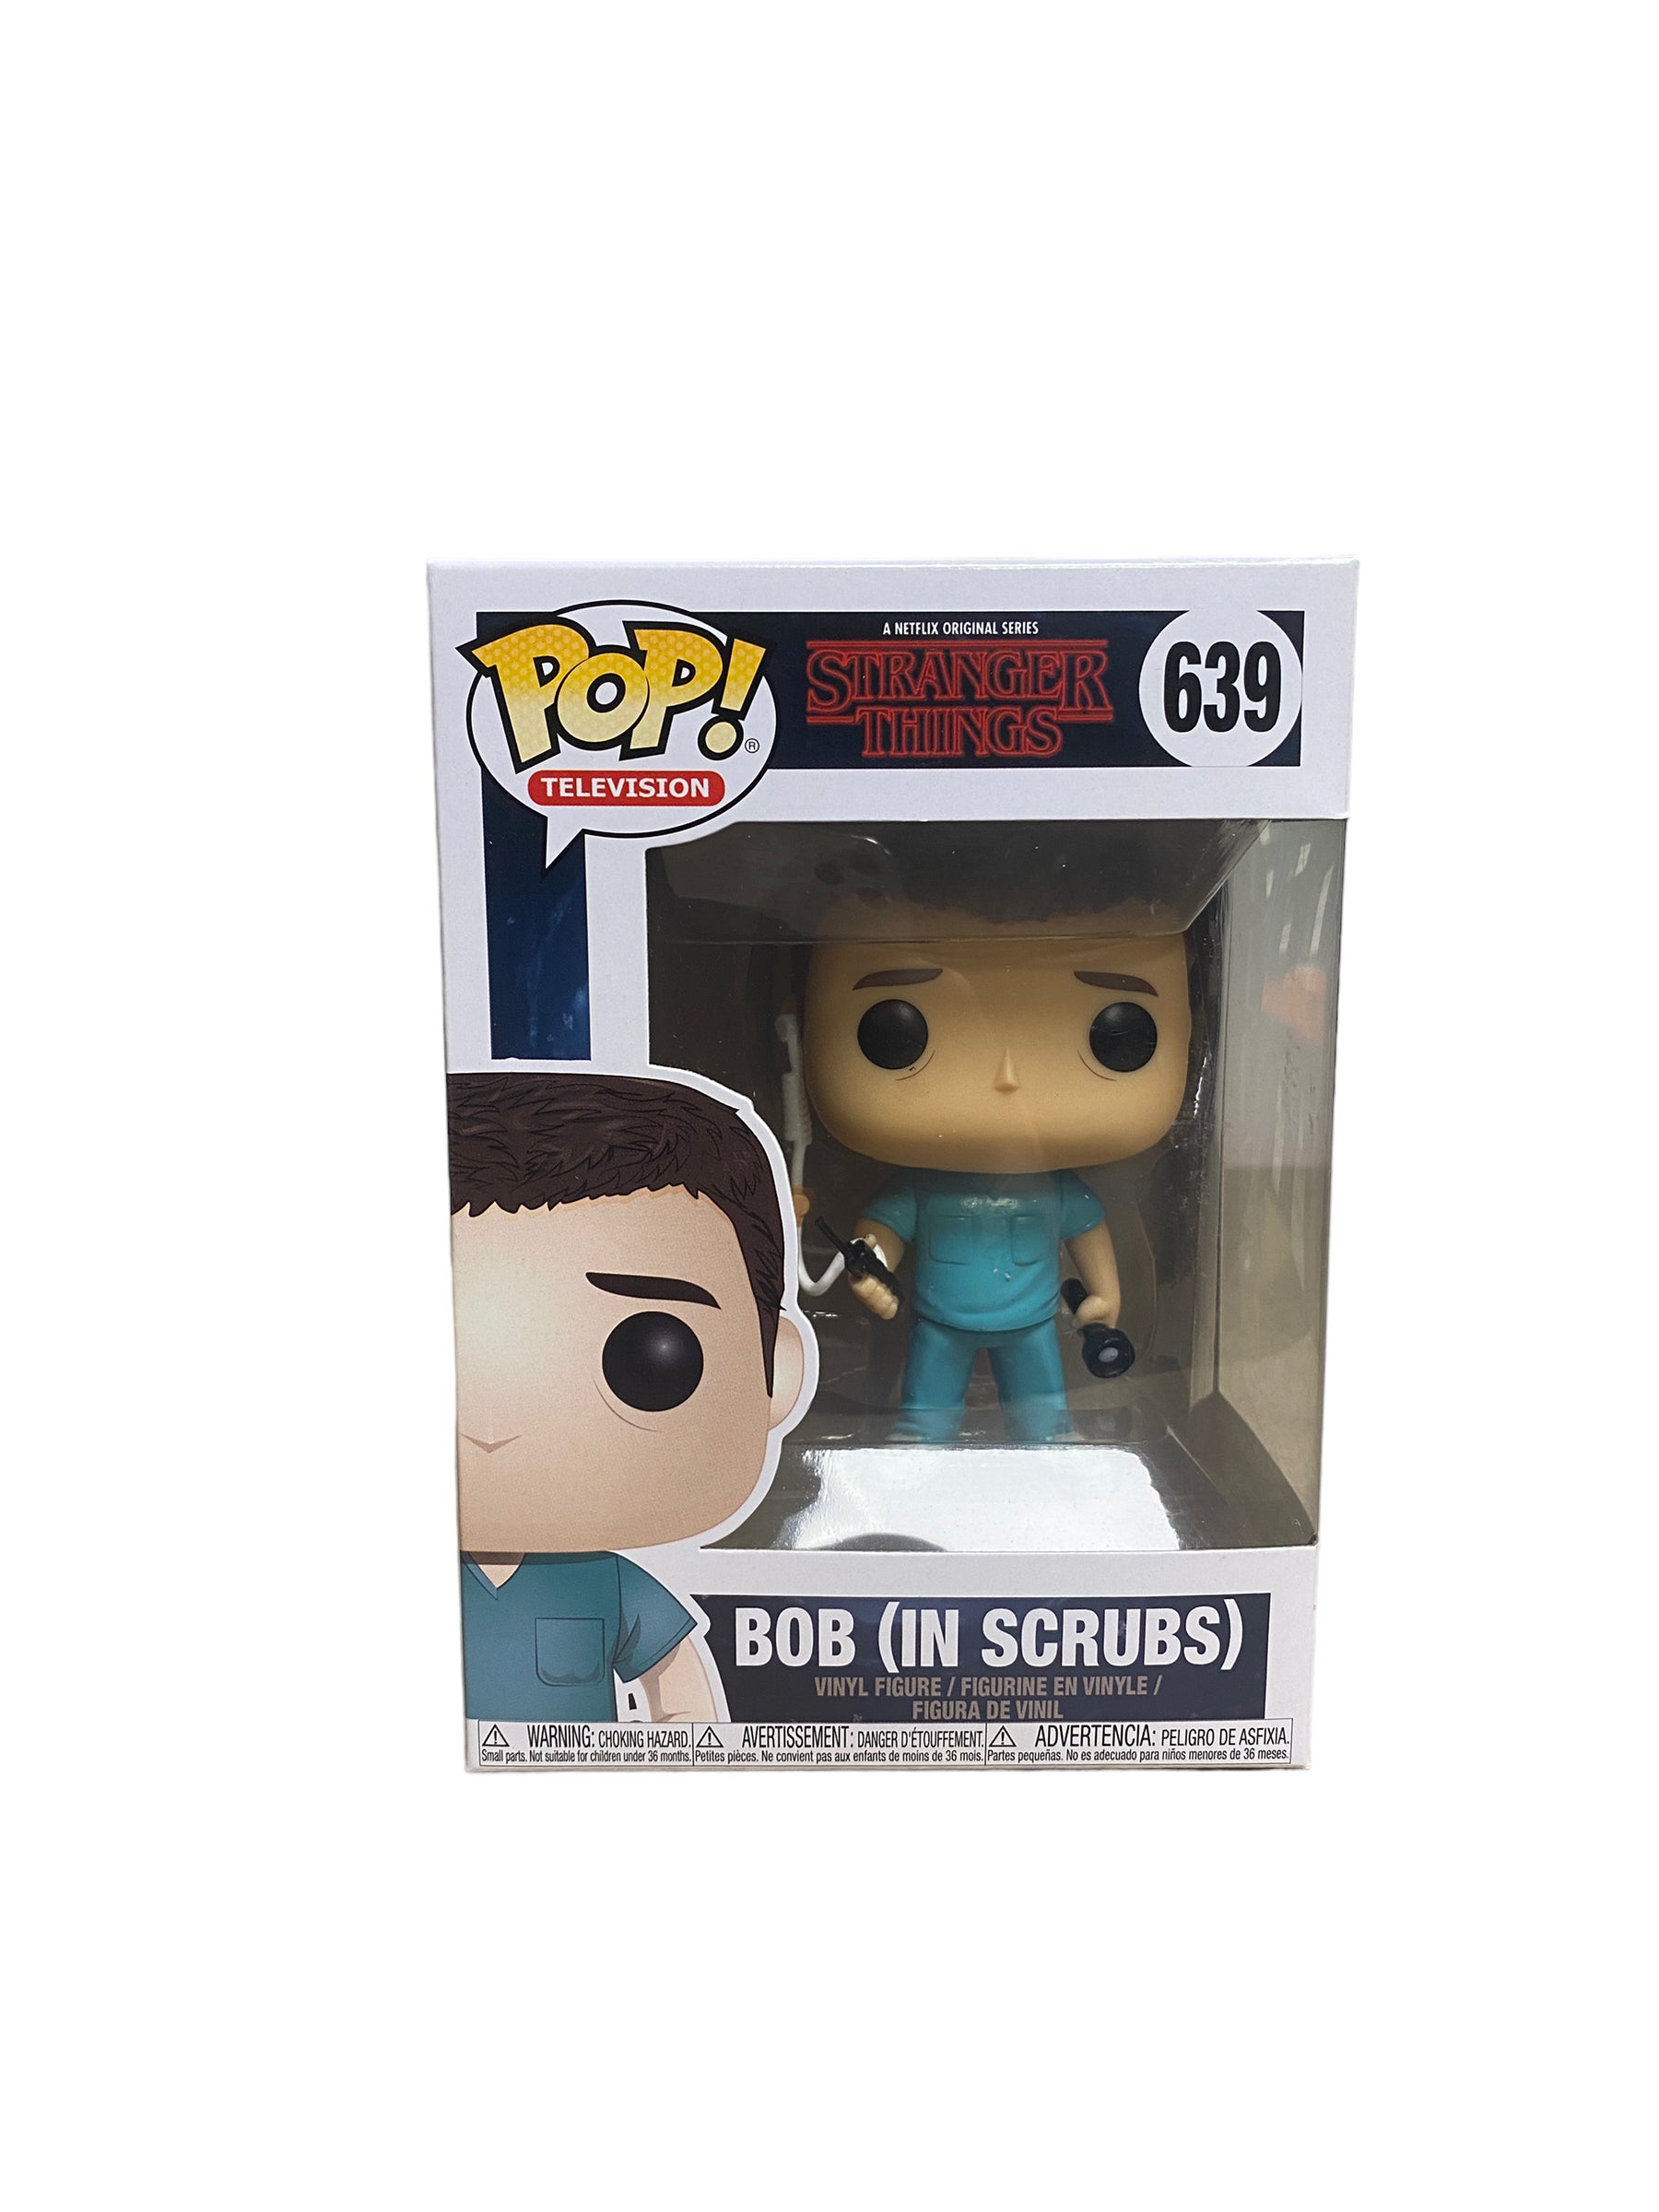 Bob (In Scrubs) #639 Funko Pop! - Stranger Things - 2018 Pop! - Condition 8.75/10